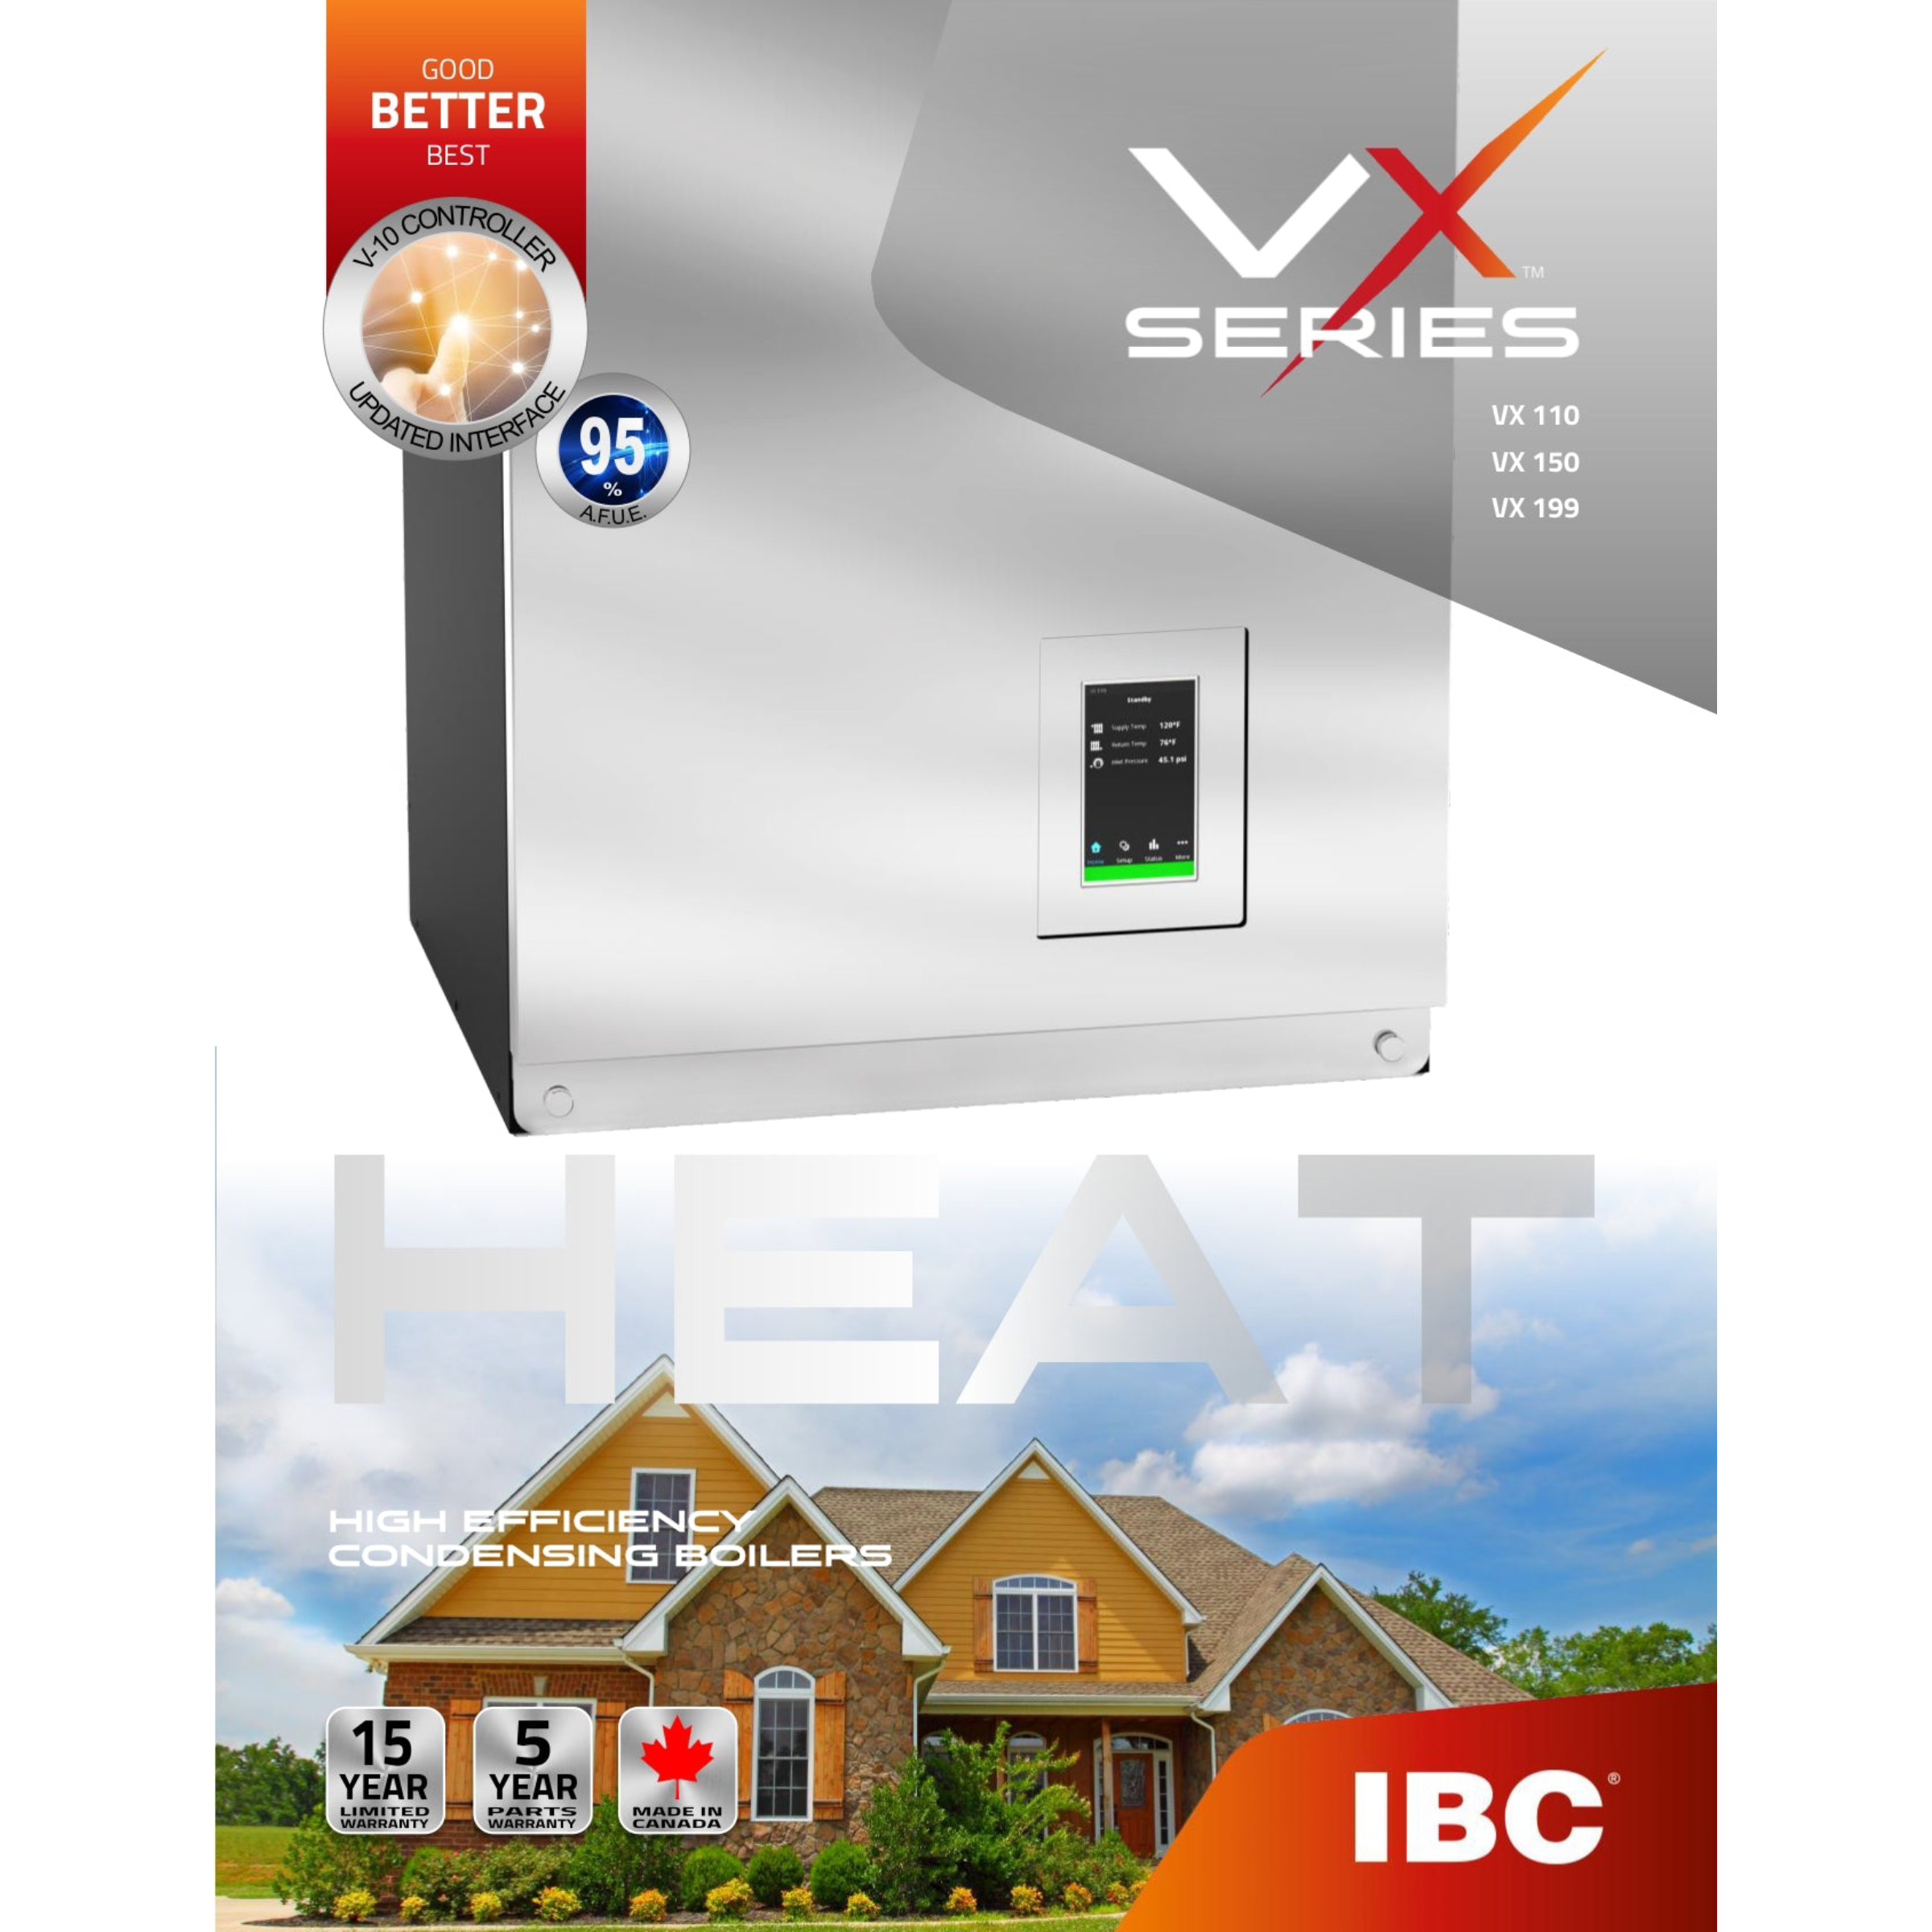 VX 199 IBC VX Series Residential High-Efficiency Modulating Condensing Boiler Natural Gas 30,600-199,000 BTU, 95% AFUE, Energy Star Qualified